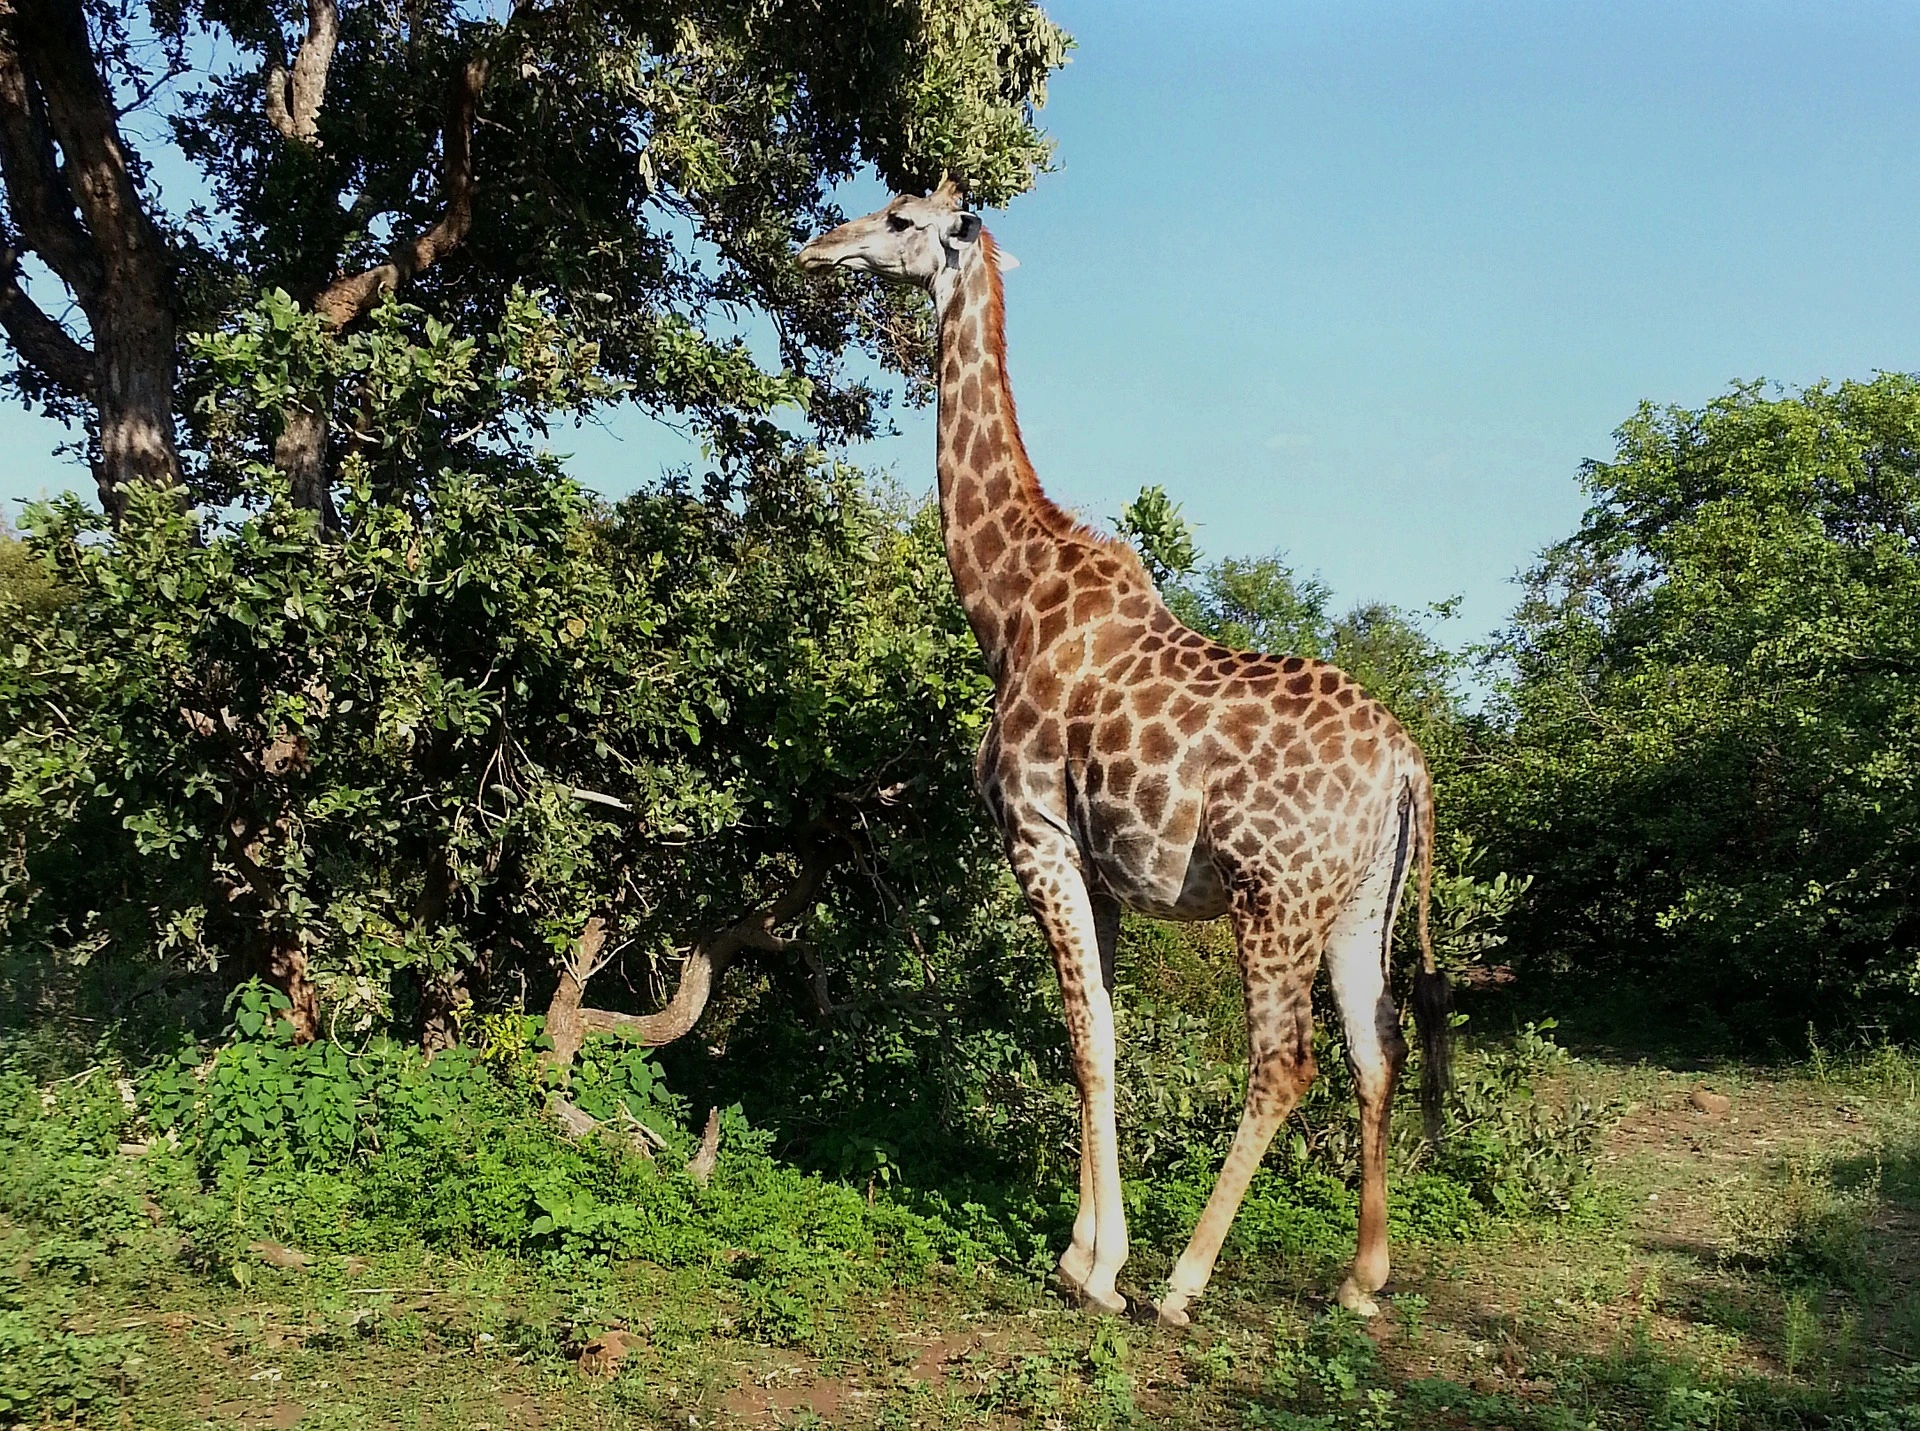 Giraffe in Kruger National Park, South Africa